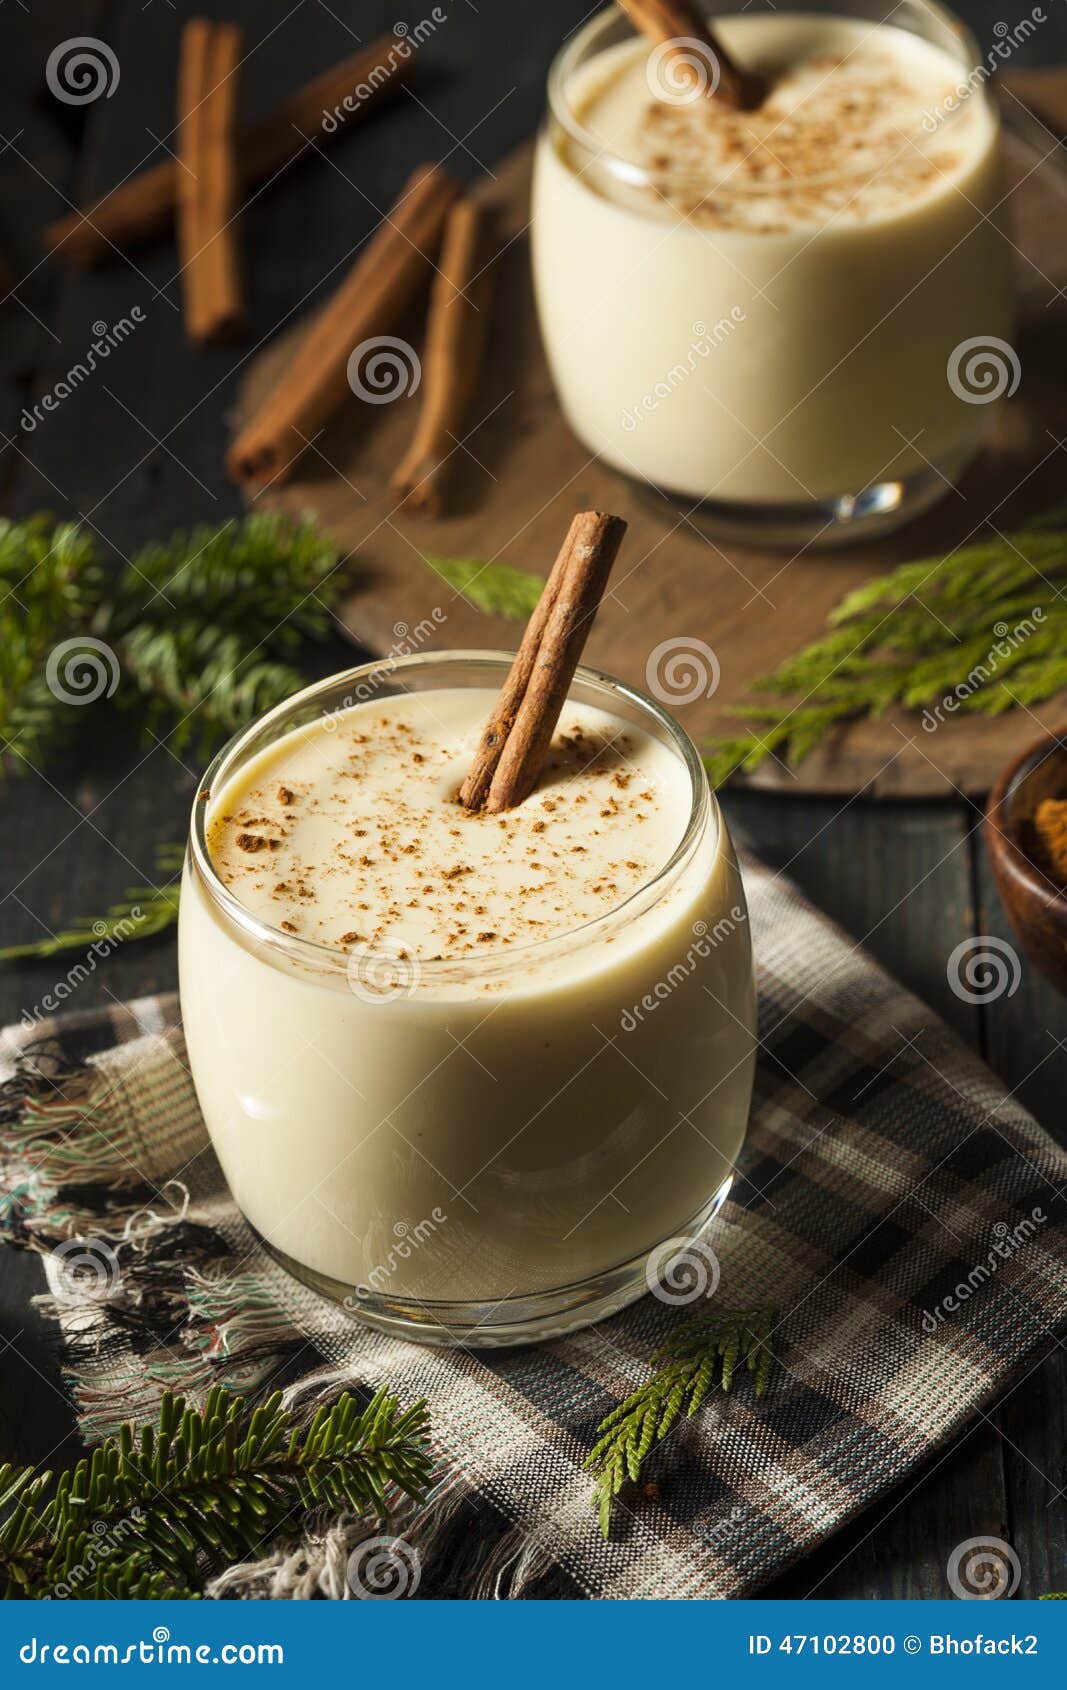 Homemade White Holiday Eggnog Stock Photo - Image of glogg, drink: 47102800